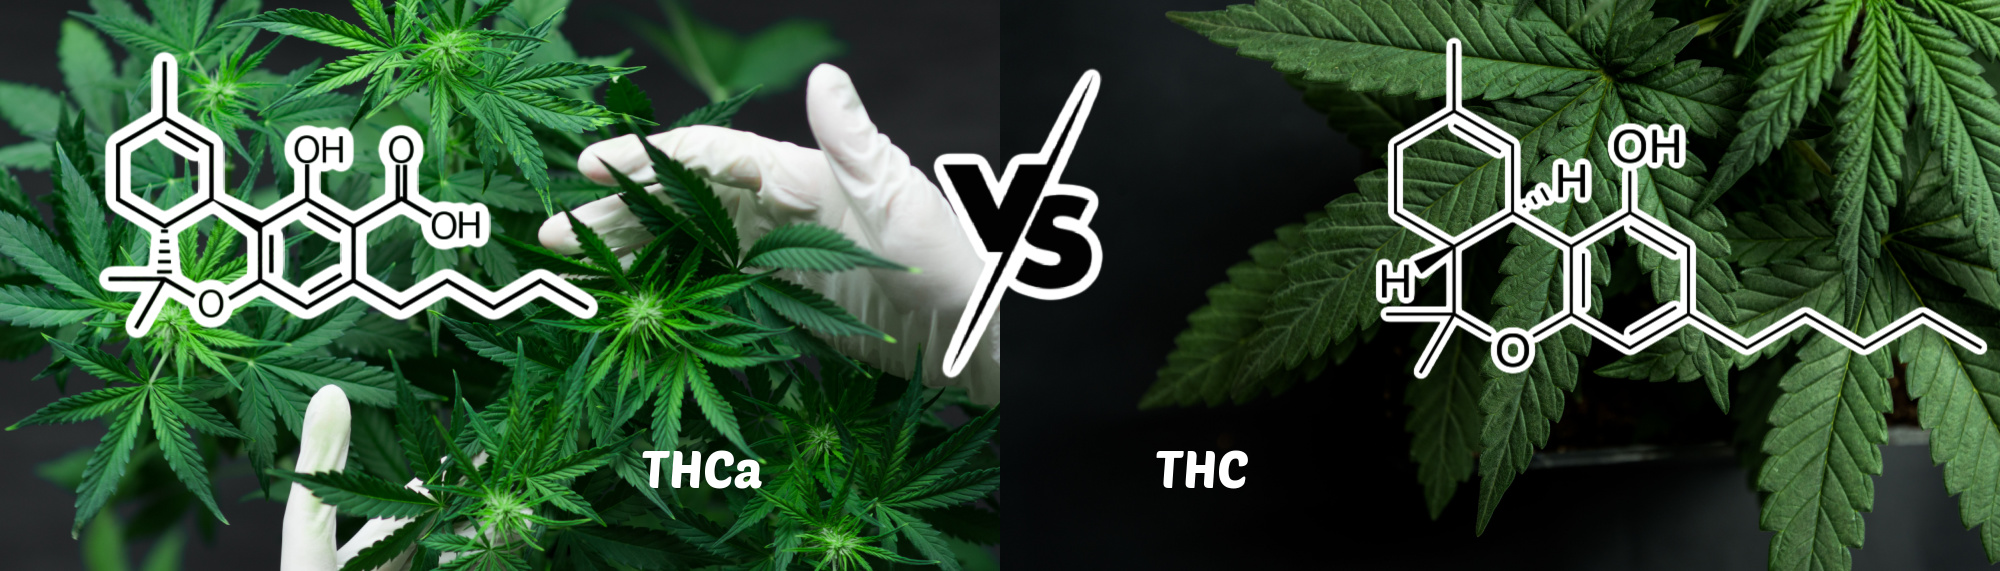 image of thca vs thc